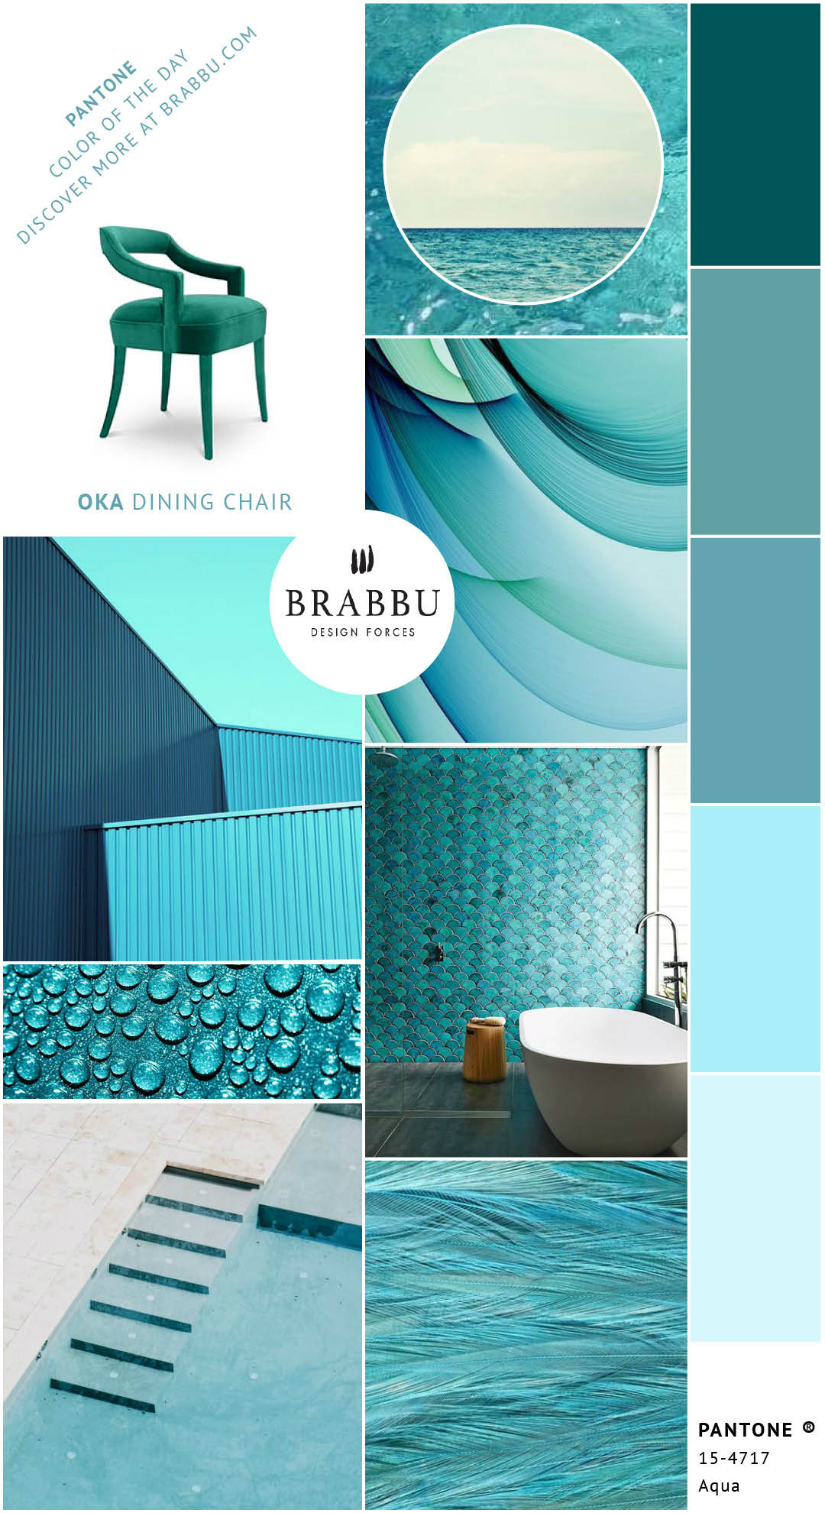 interior designers interior designers How to Decorate with Blue According to Top Interior Designers How to Decorate with Blue According to Top Interior Designers